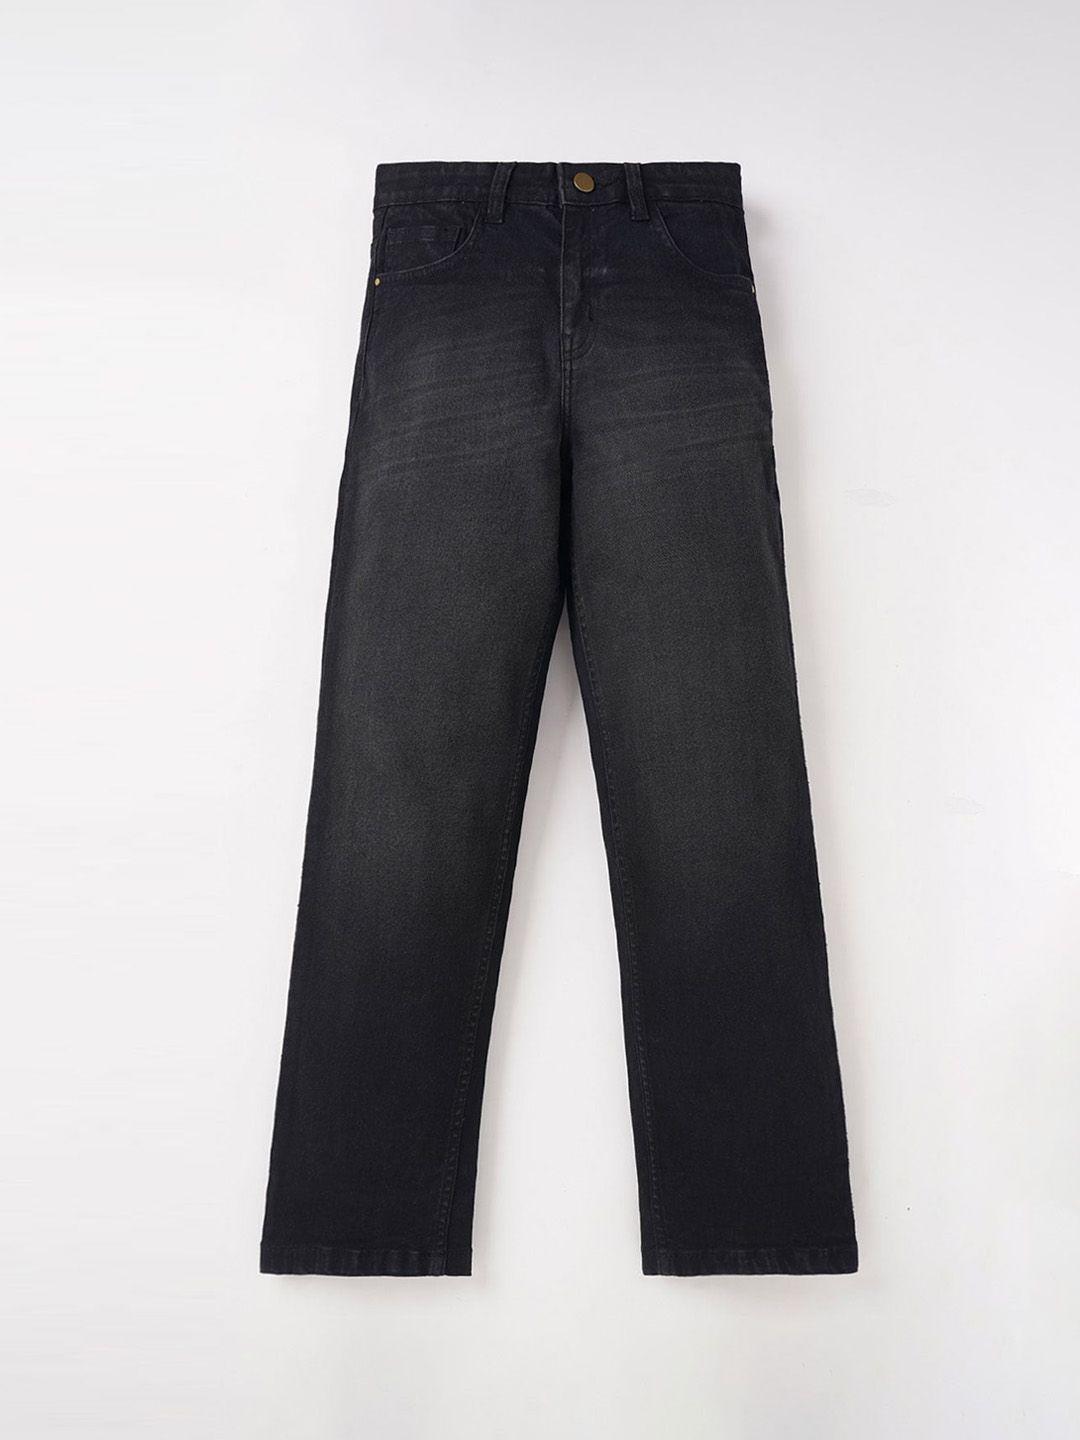 edheads boys light fade cotton stretchable jeans